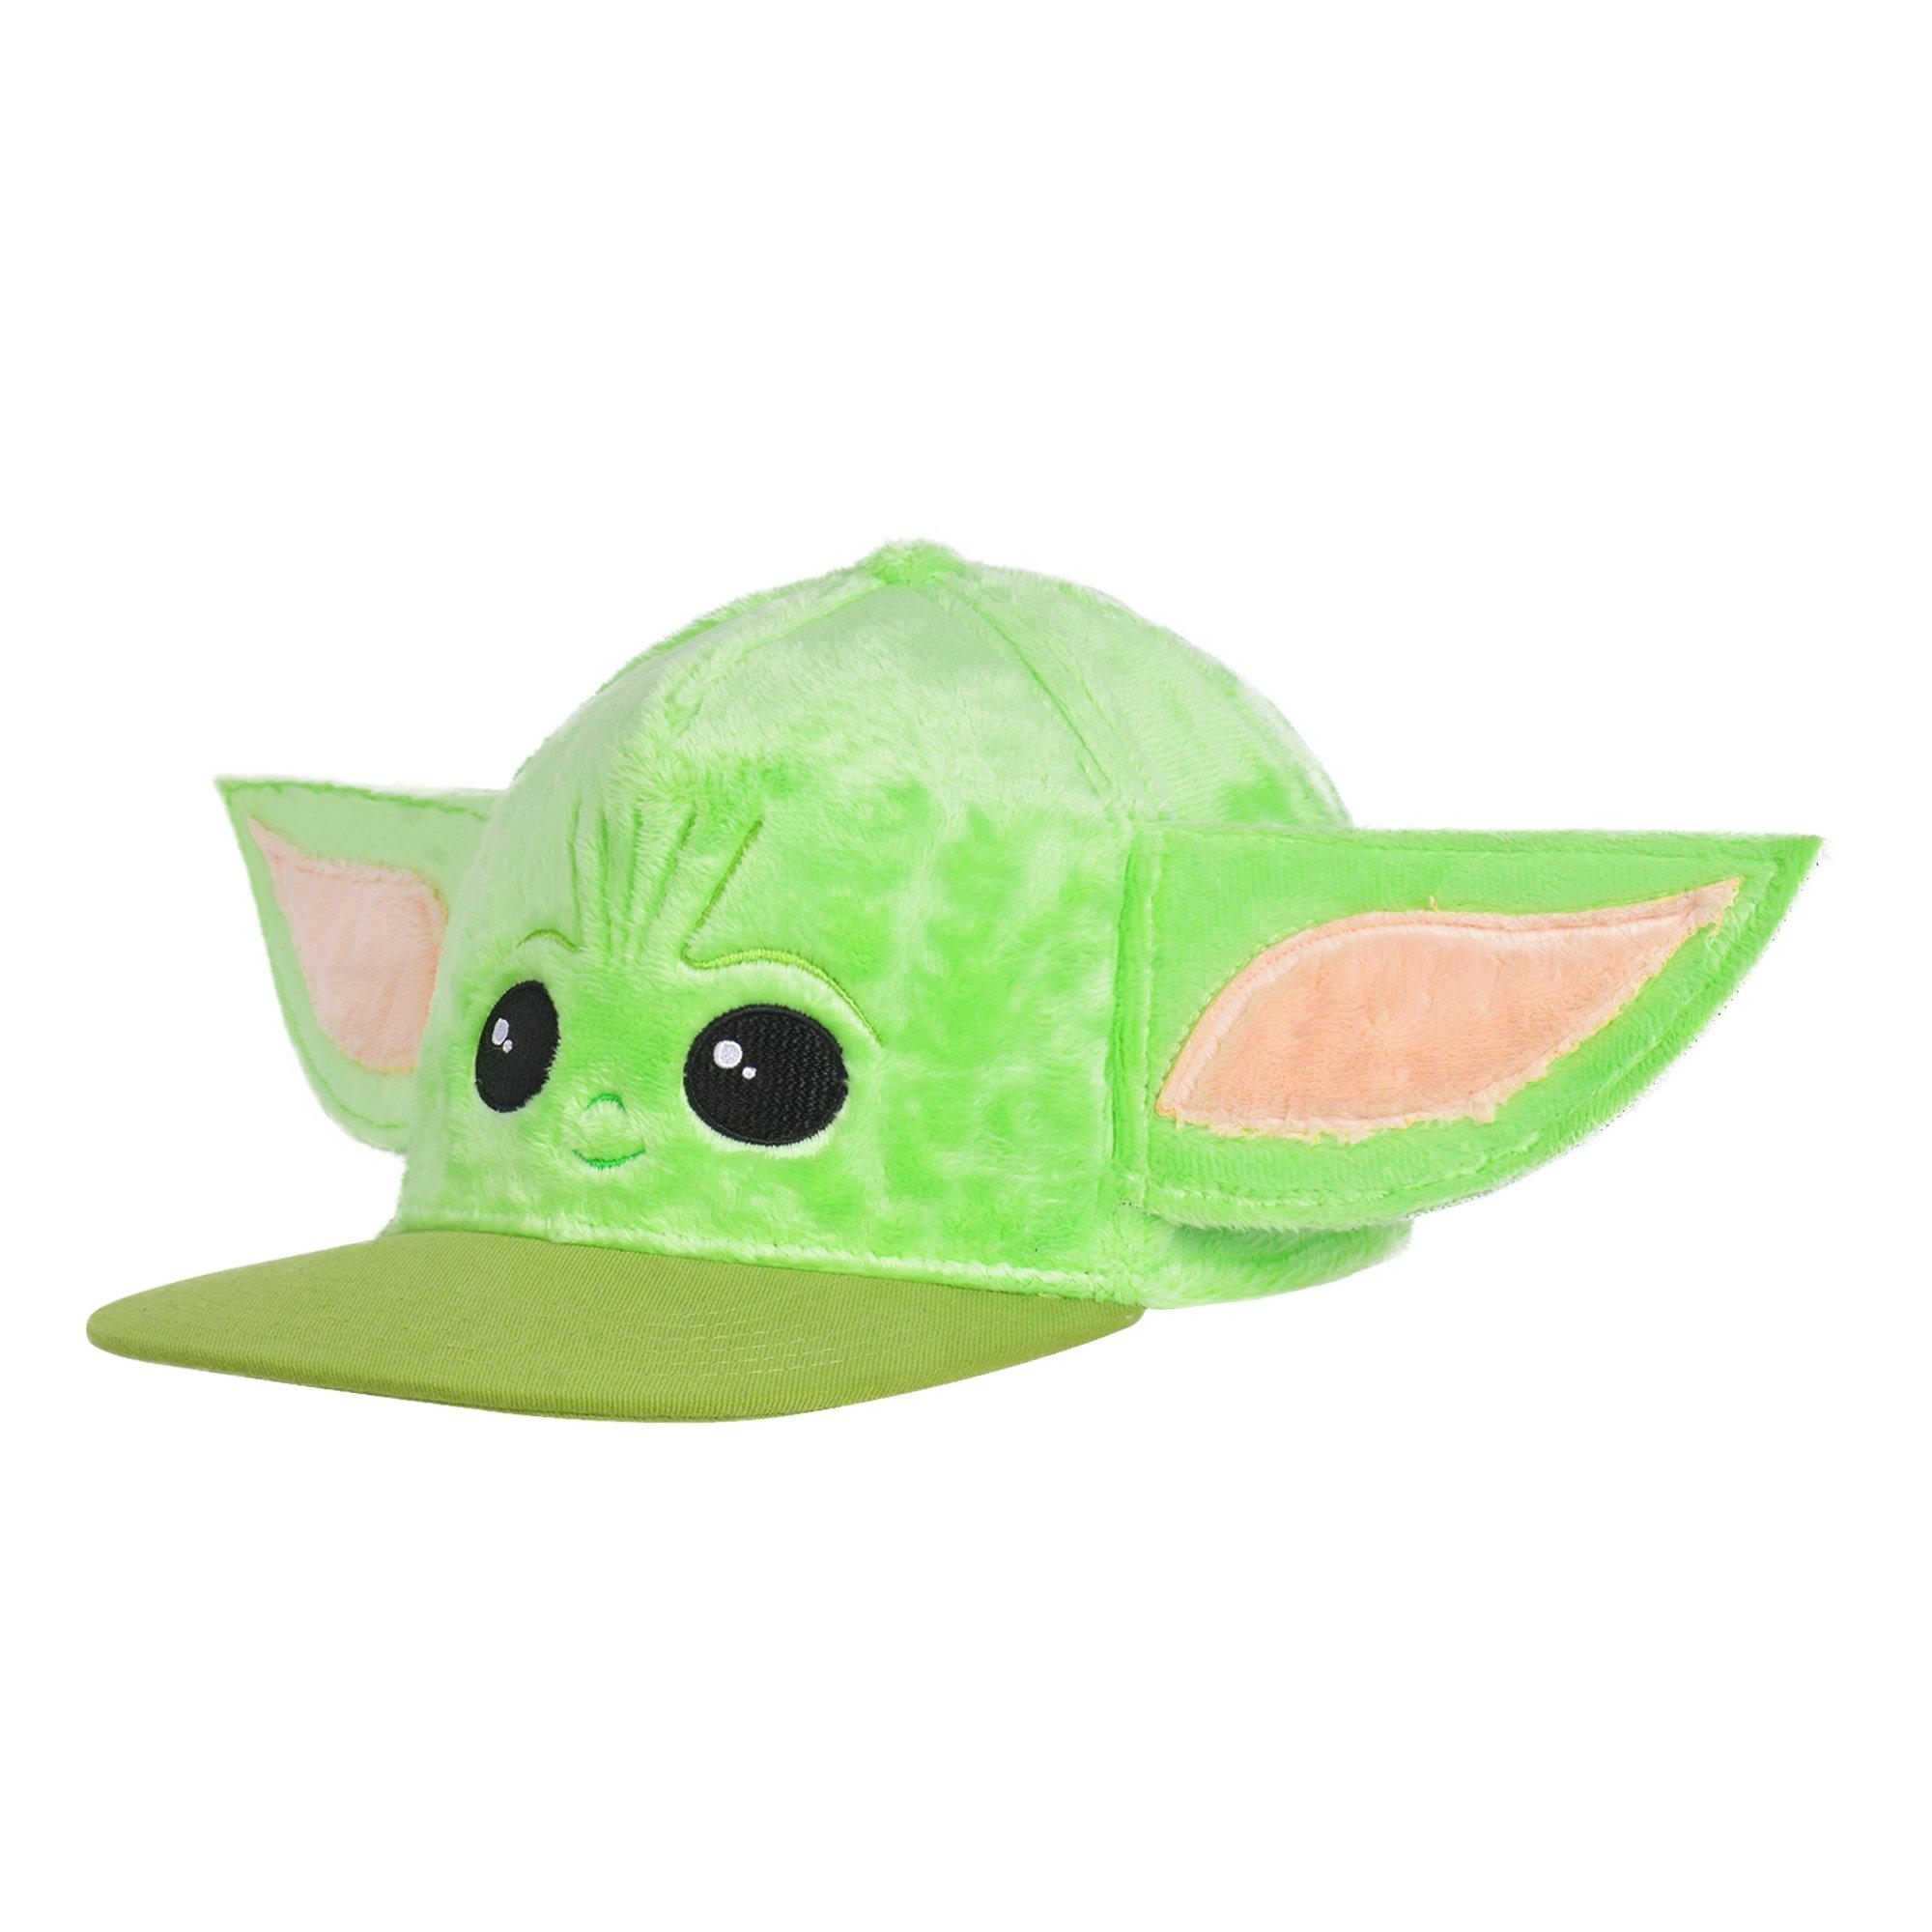 Star Wars: The Mandalorian Grogu Plush Hat with Ears